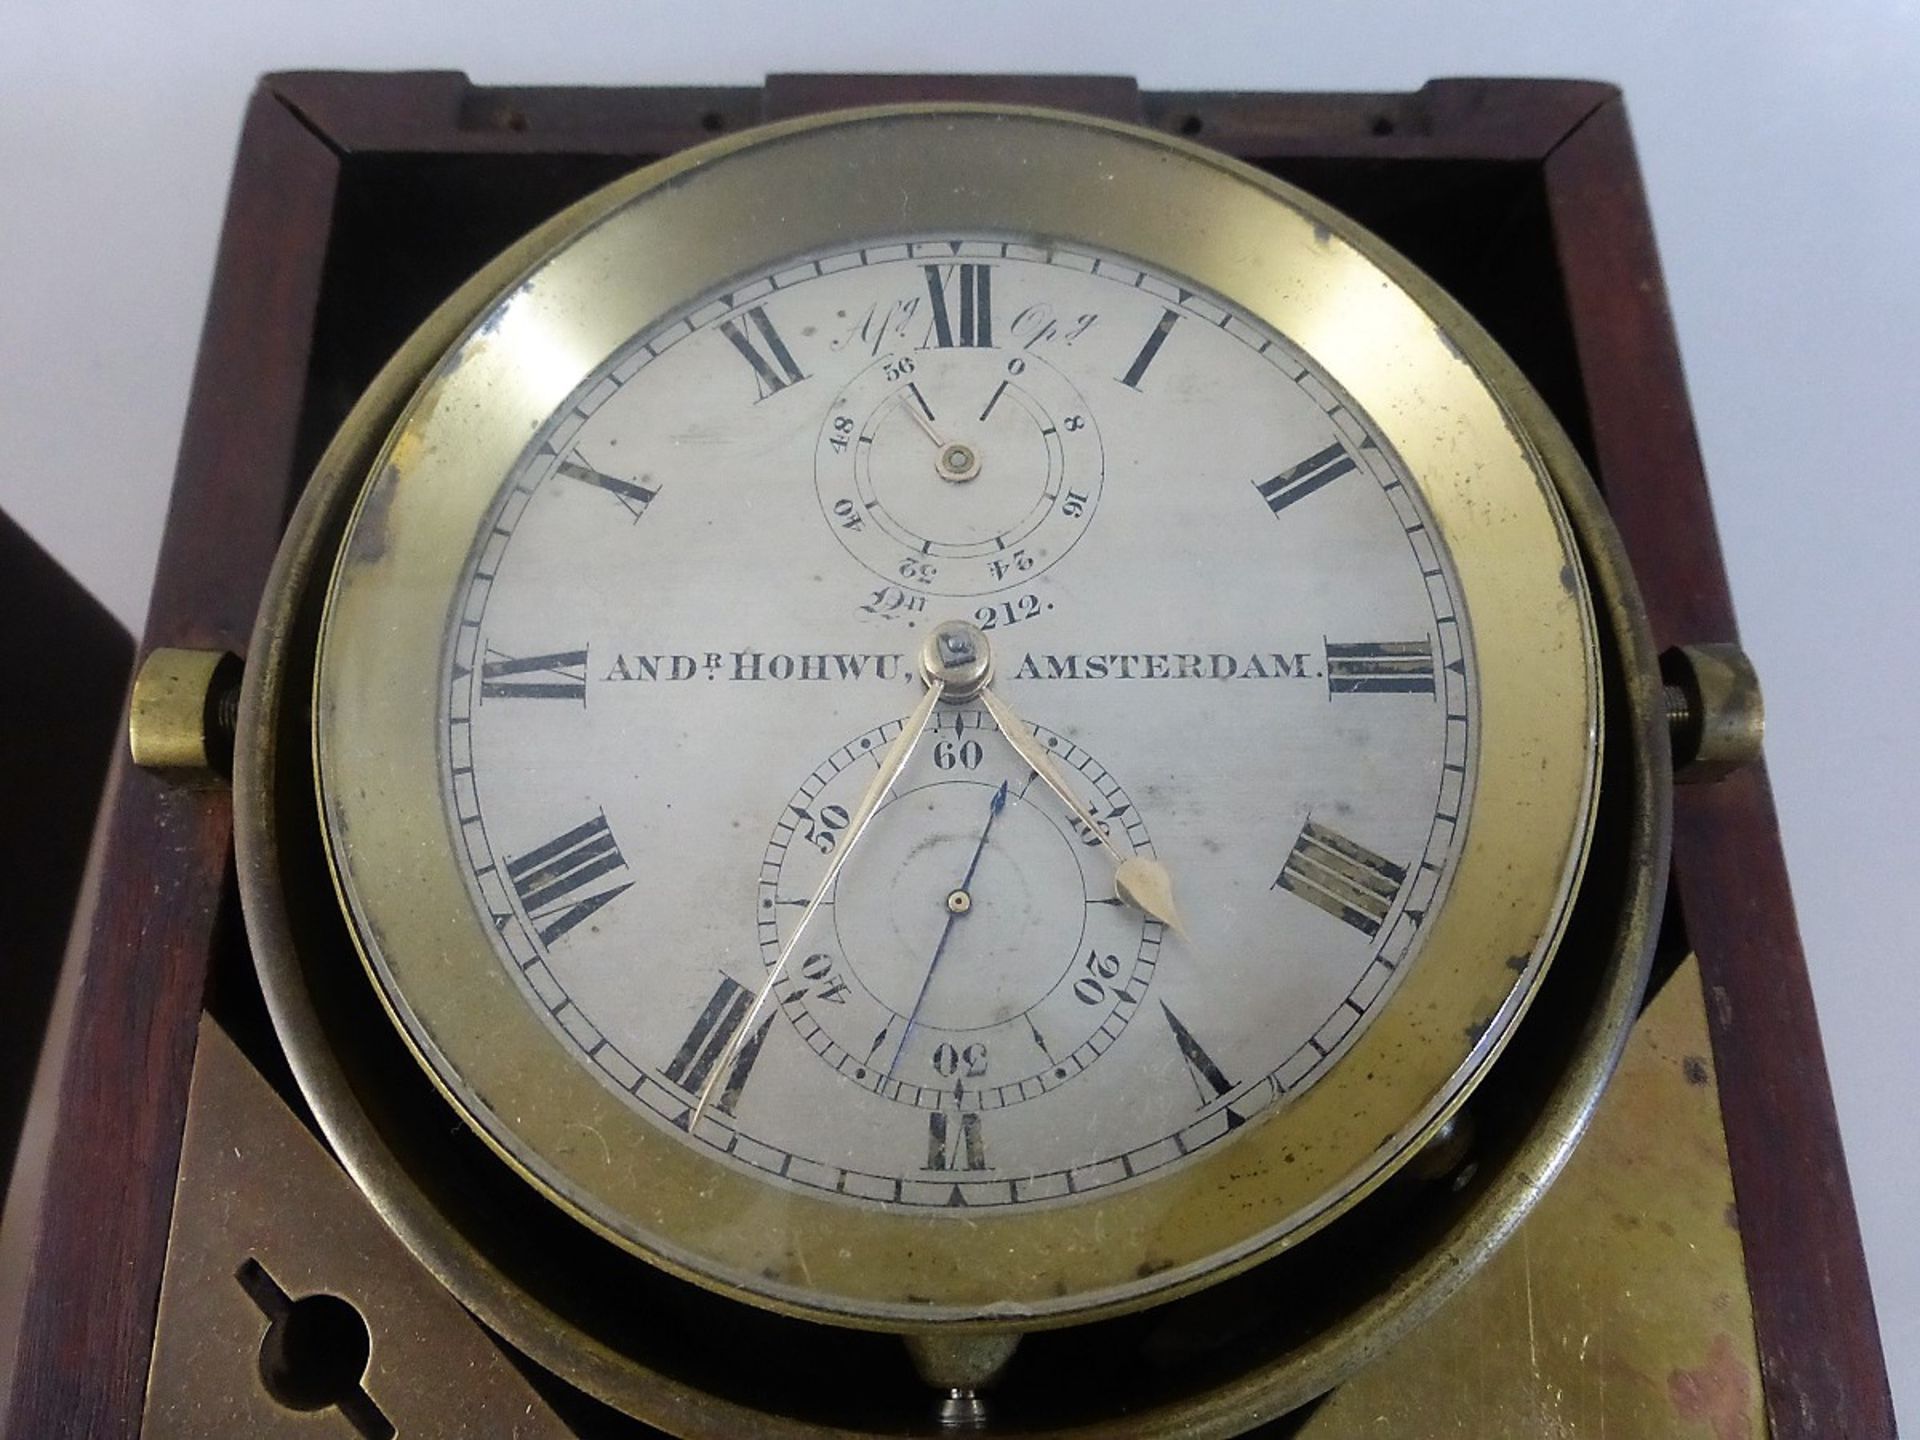 Schiffschronometer Andreas Hohwü Amsterdam - Image 3 of 5